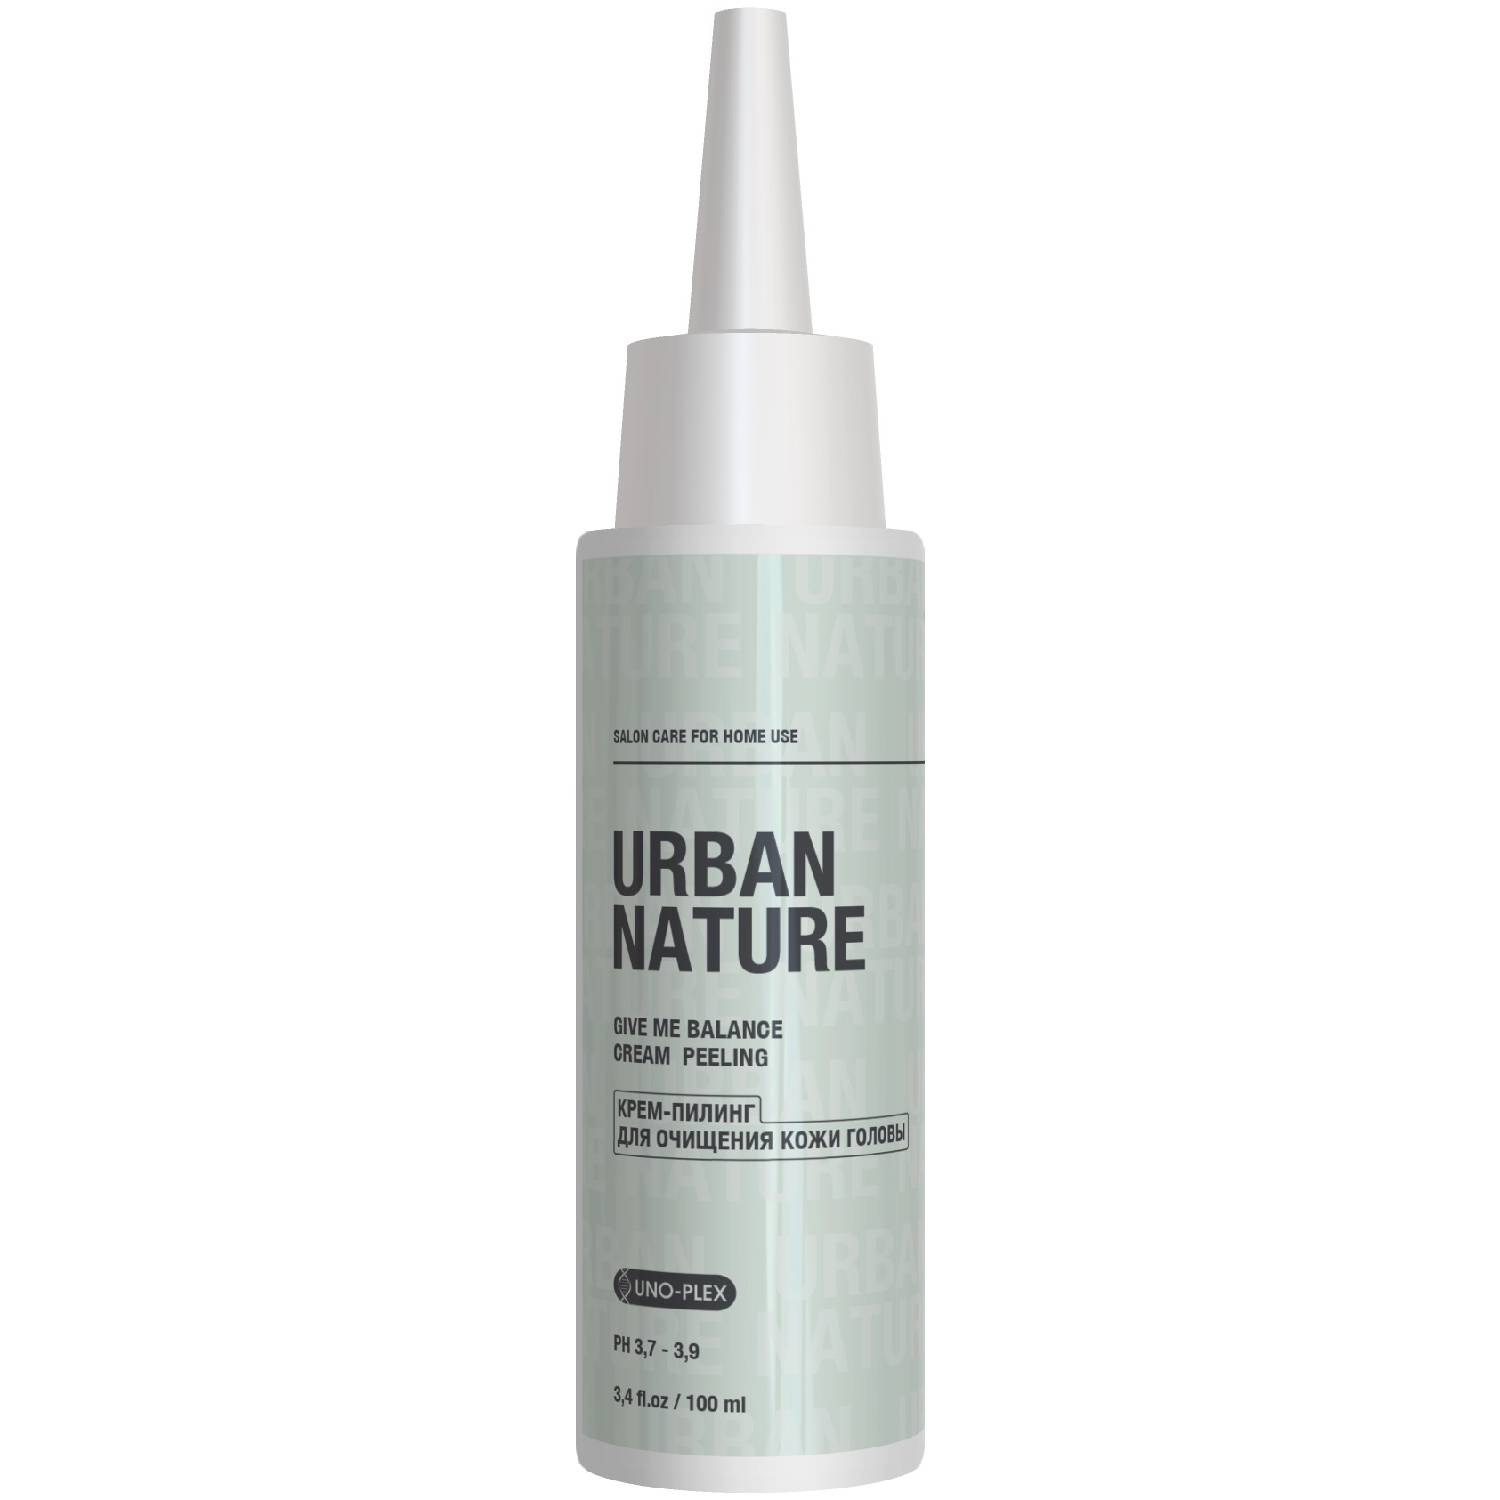 Urban Nature Крем-пилинг для очищения кожи головы, 100 мл (Urban Nature, Give Me Balance)